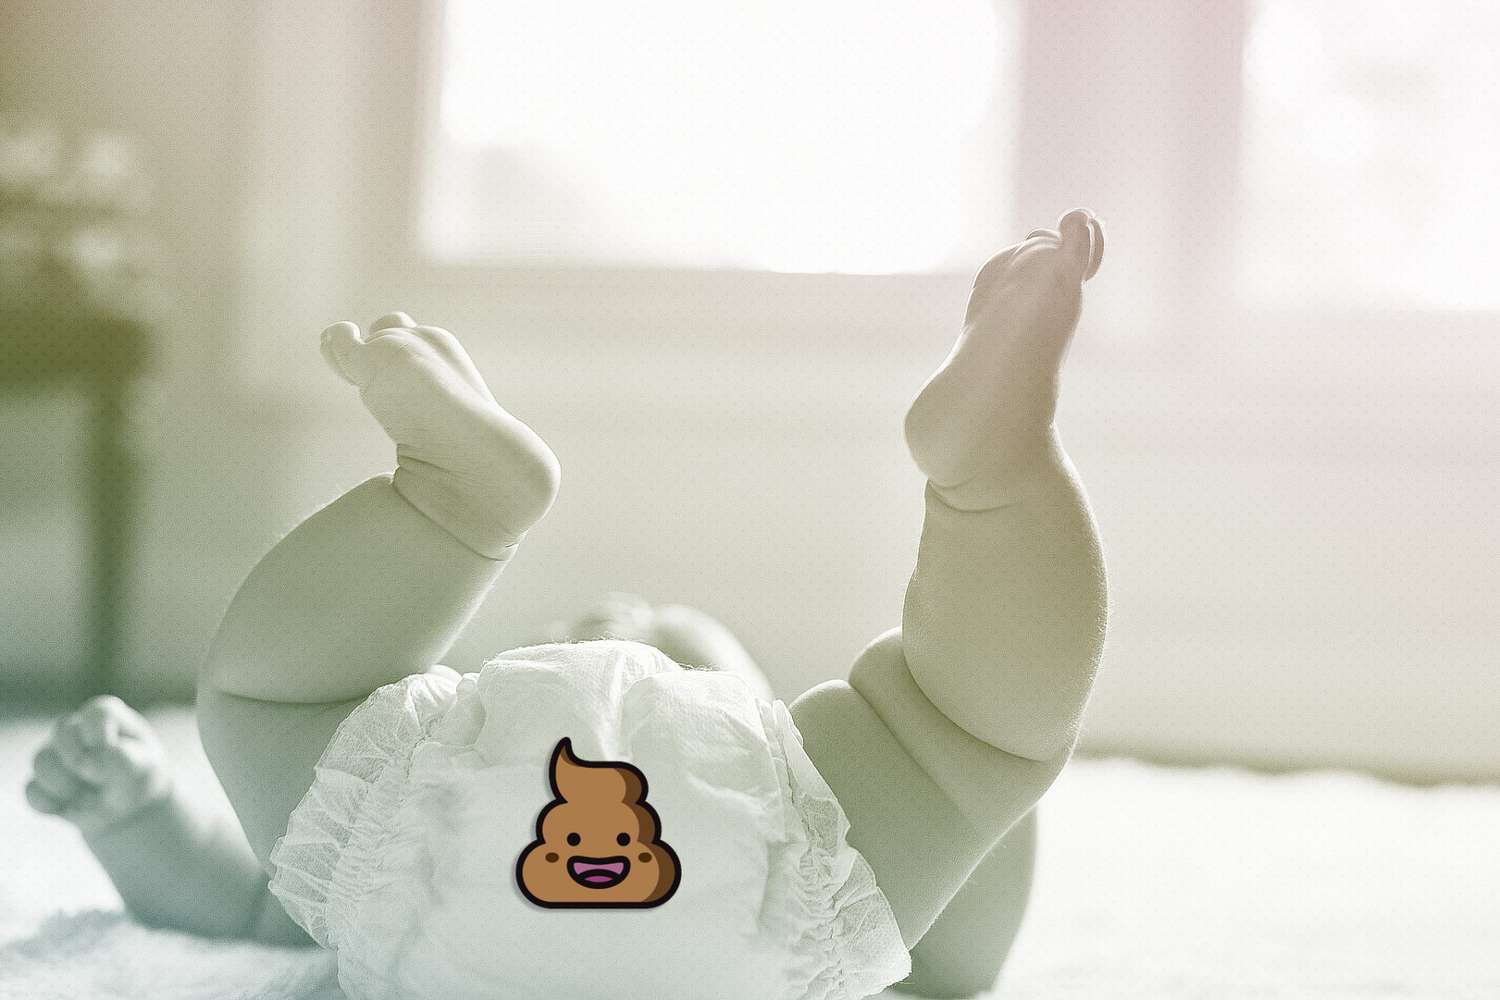 baby in diaper laying on floor with feet in air, poop emoji overlay diaper